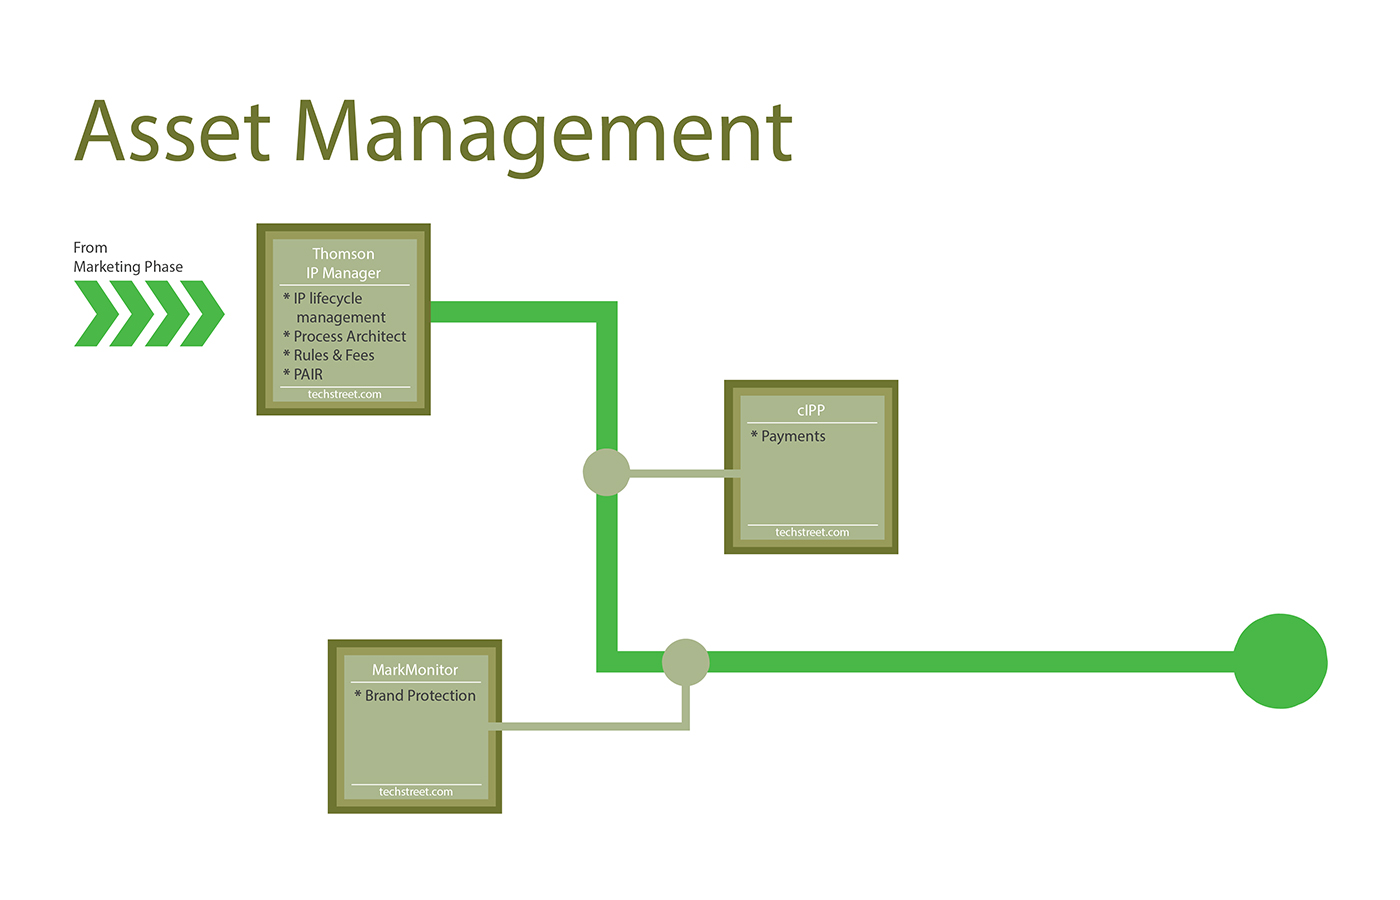 Asset Management Phase Flowchart